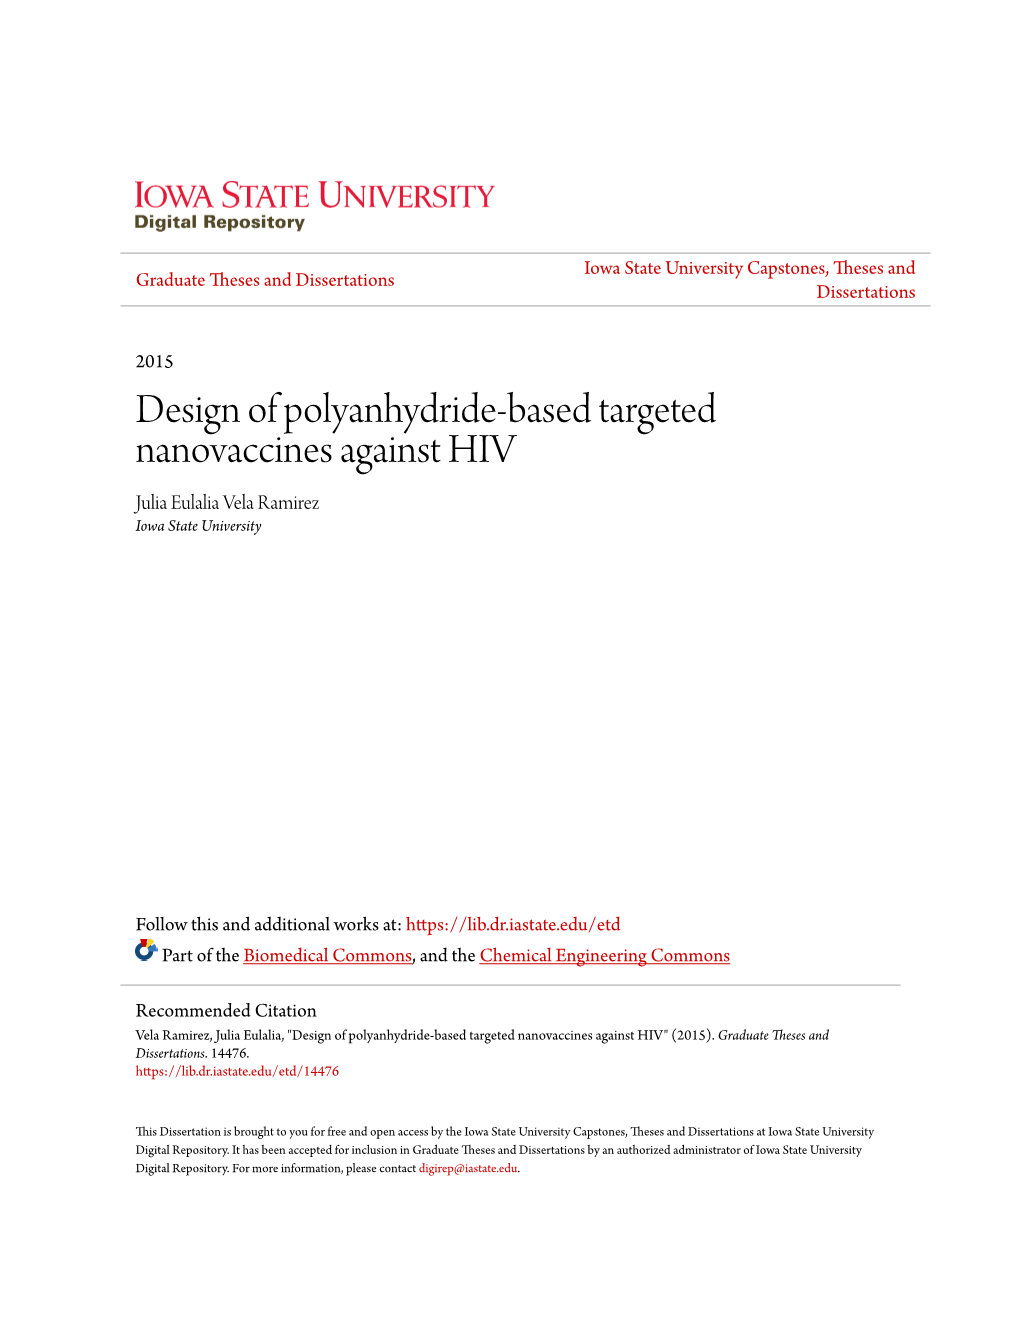 Design of Polyanhydride-Based Targeted Nanovaccines Against HIV Julia Eulalia Vela Ramirez Iowa State University